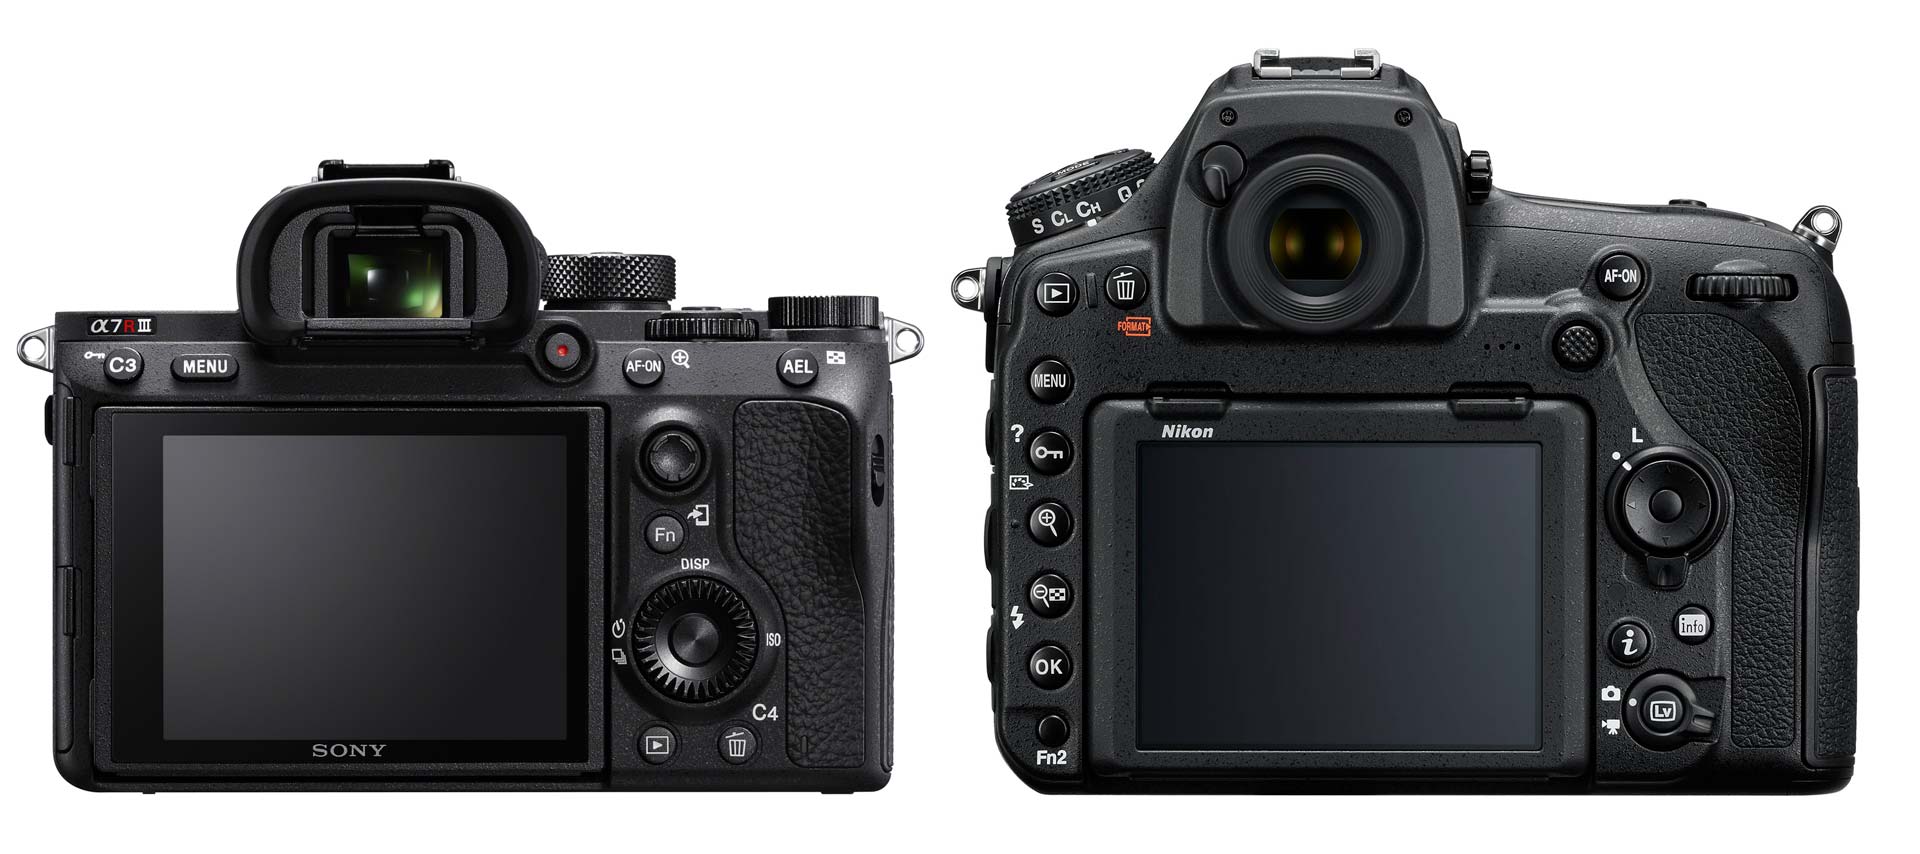 Sony A7R III sensor review: The Nikon D850 meets its mirrorless match -  DXOMARK